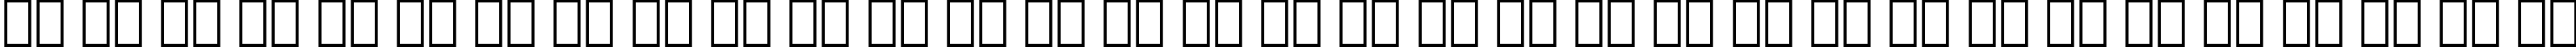 Пример написания русского алфавита шрифтом Galliard Bold Italic BT